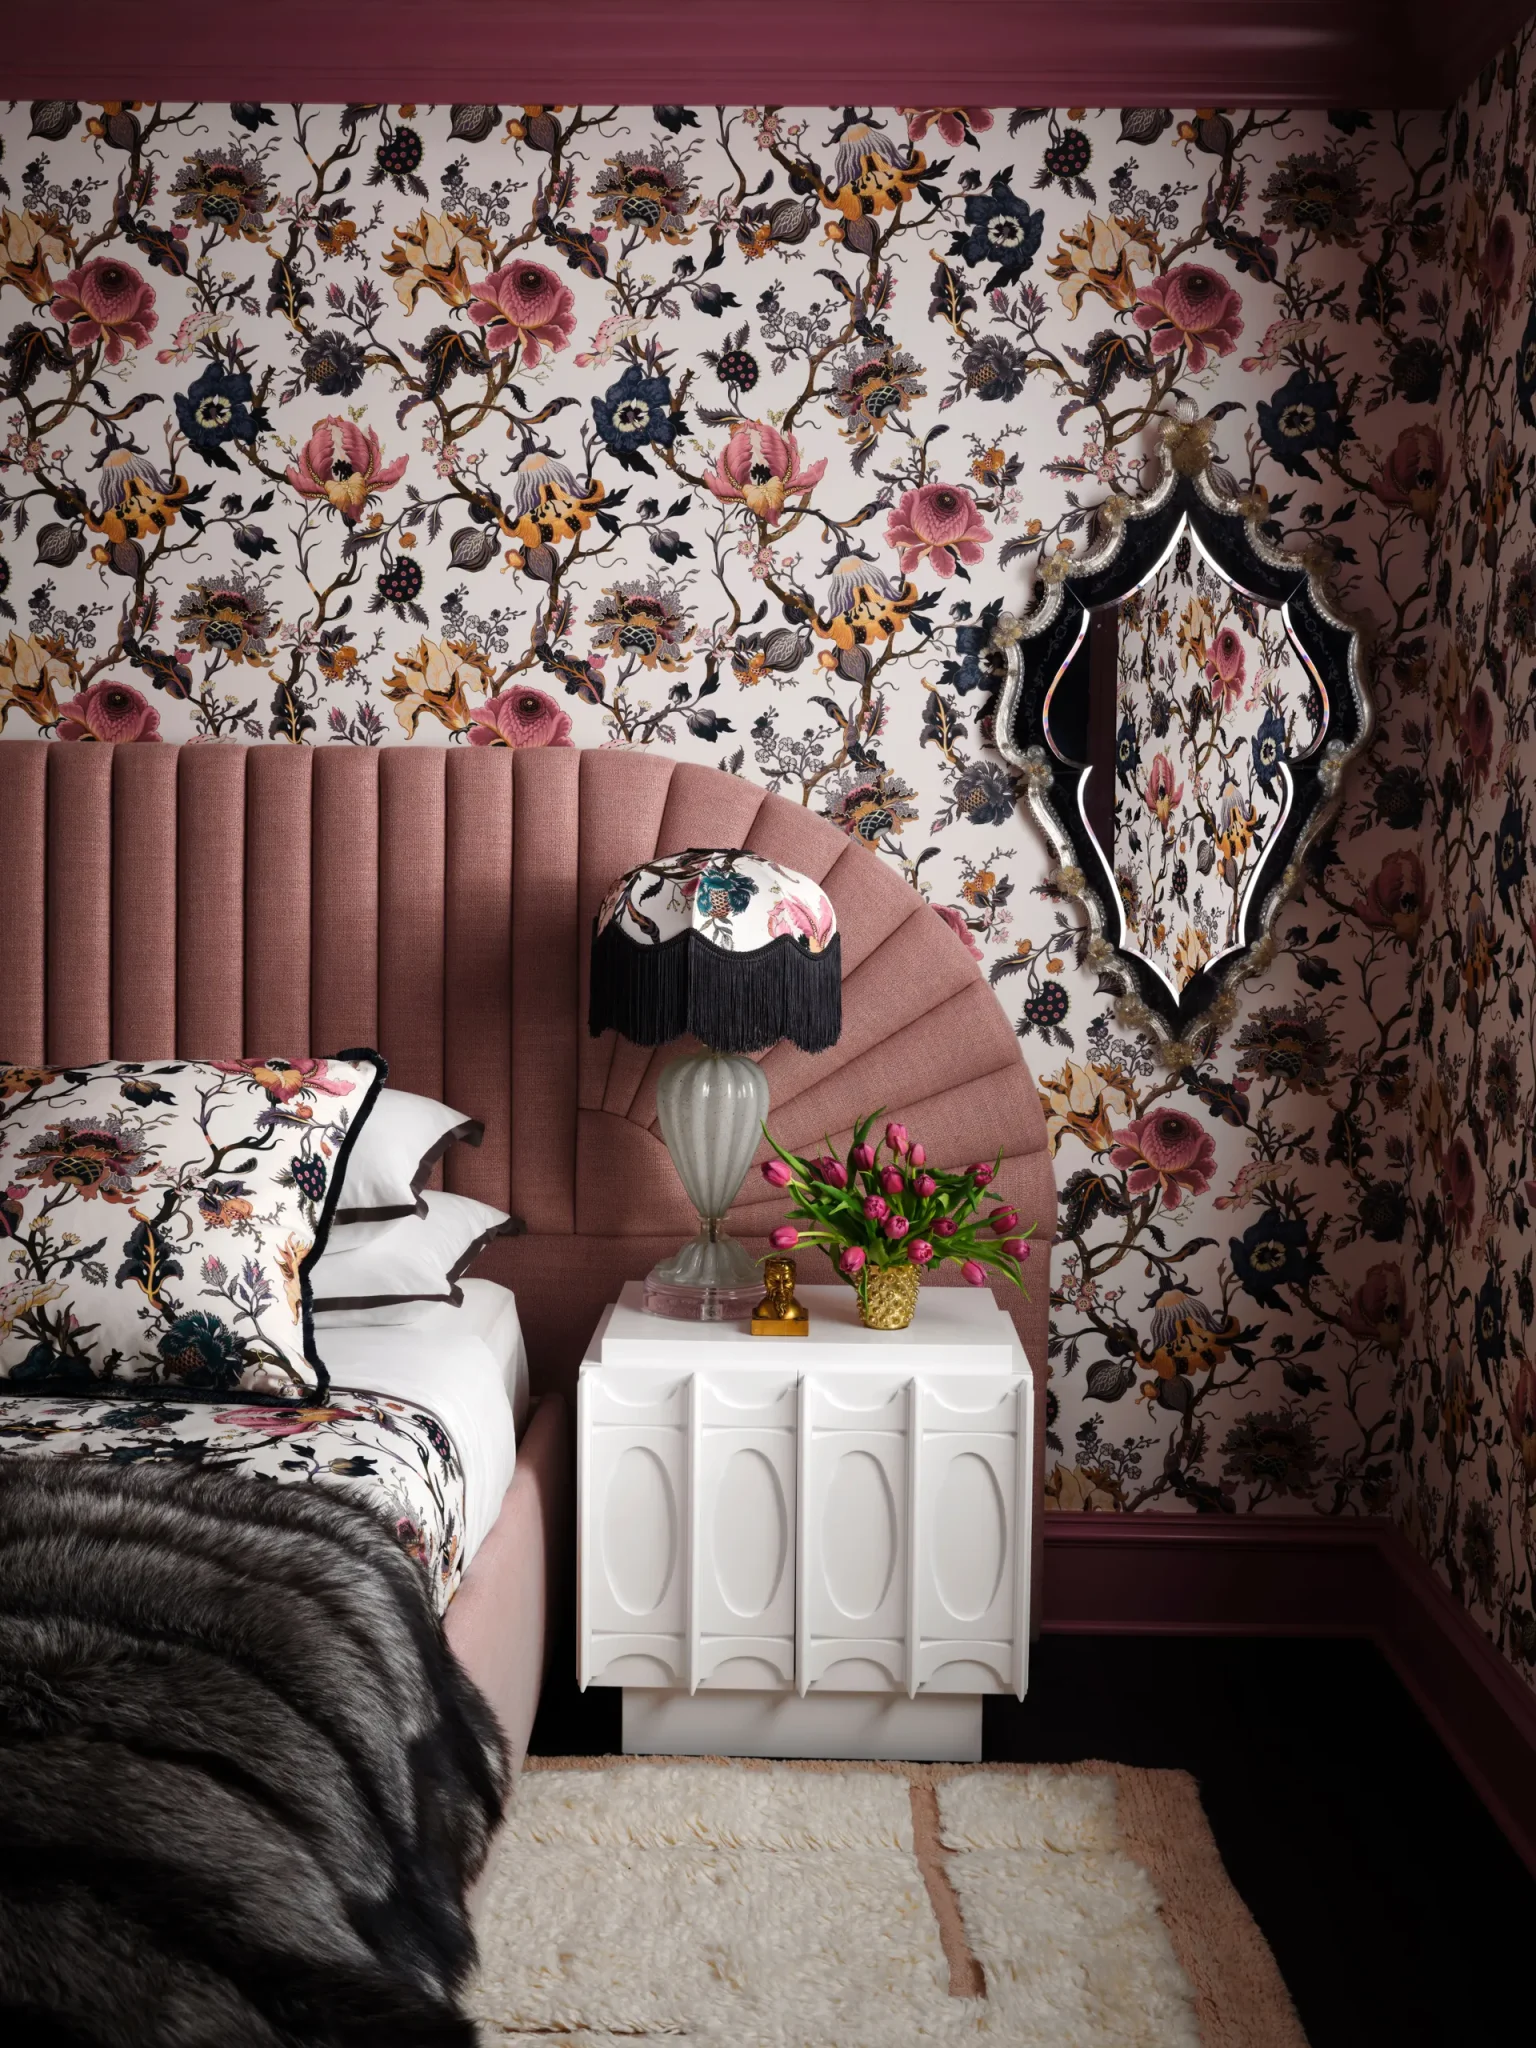 RuPauls guest bedroom designed by Martyn Lawrence Bullard